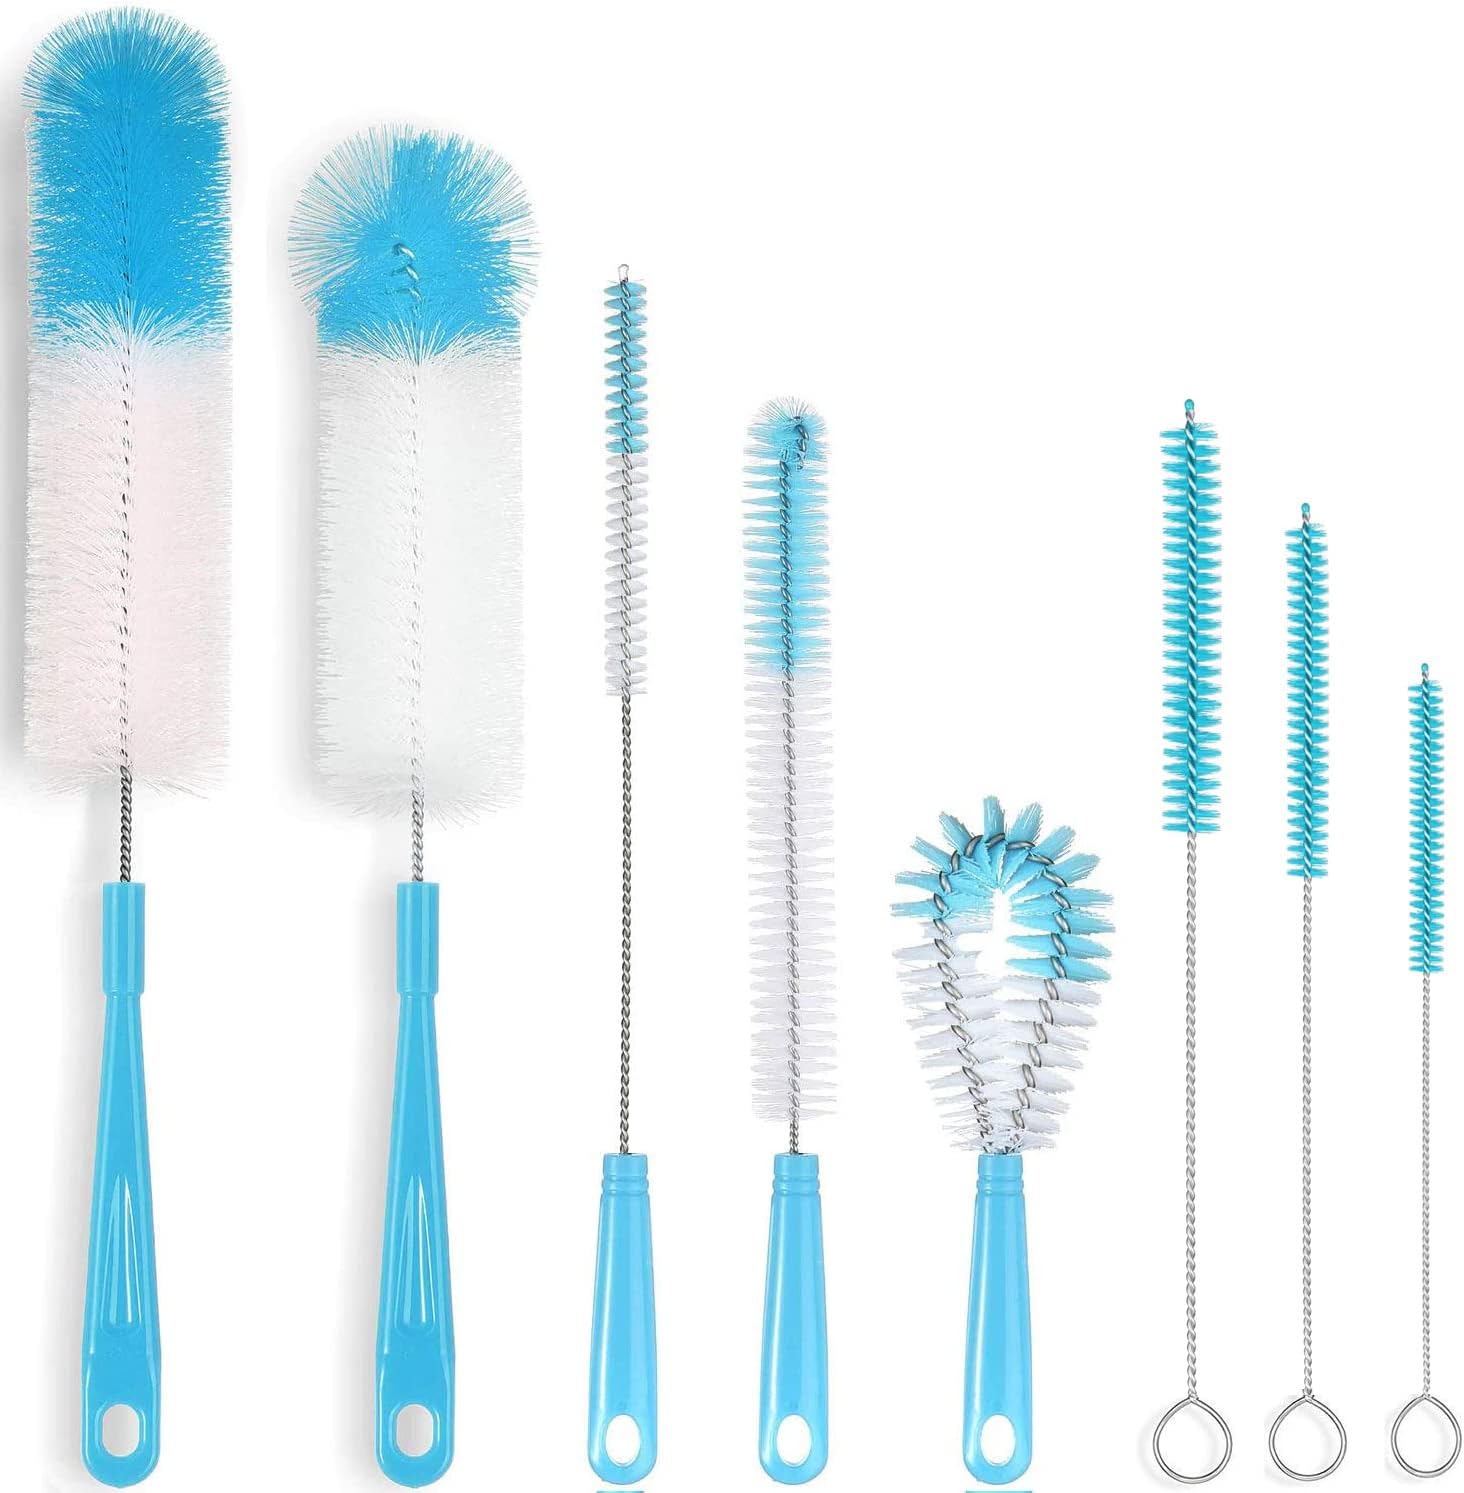 cn1st 6 pcs cleaning brush, scrub brush set for kitchen and